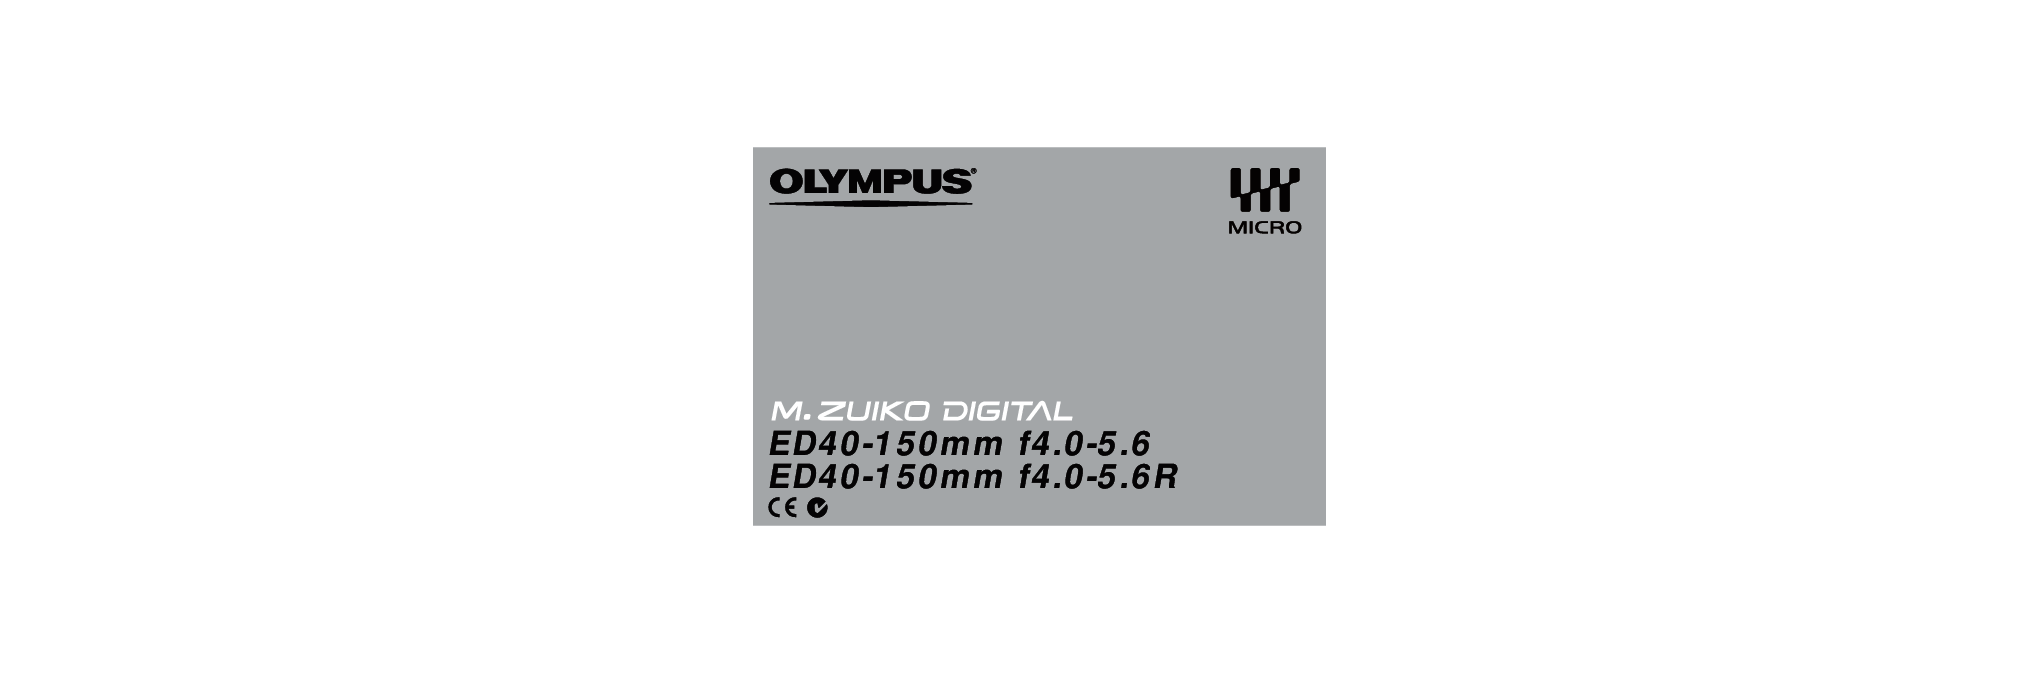 奥林巴斯 Olympus ED 40-150mm f4.0-5.6 使用说明书 封面